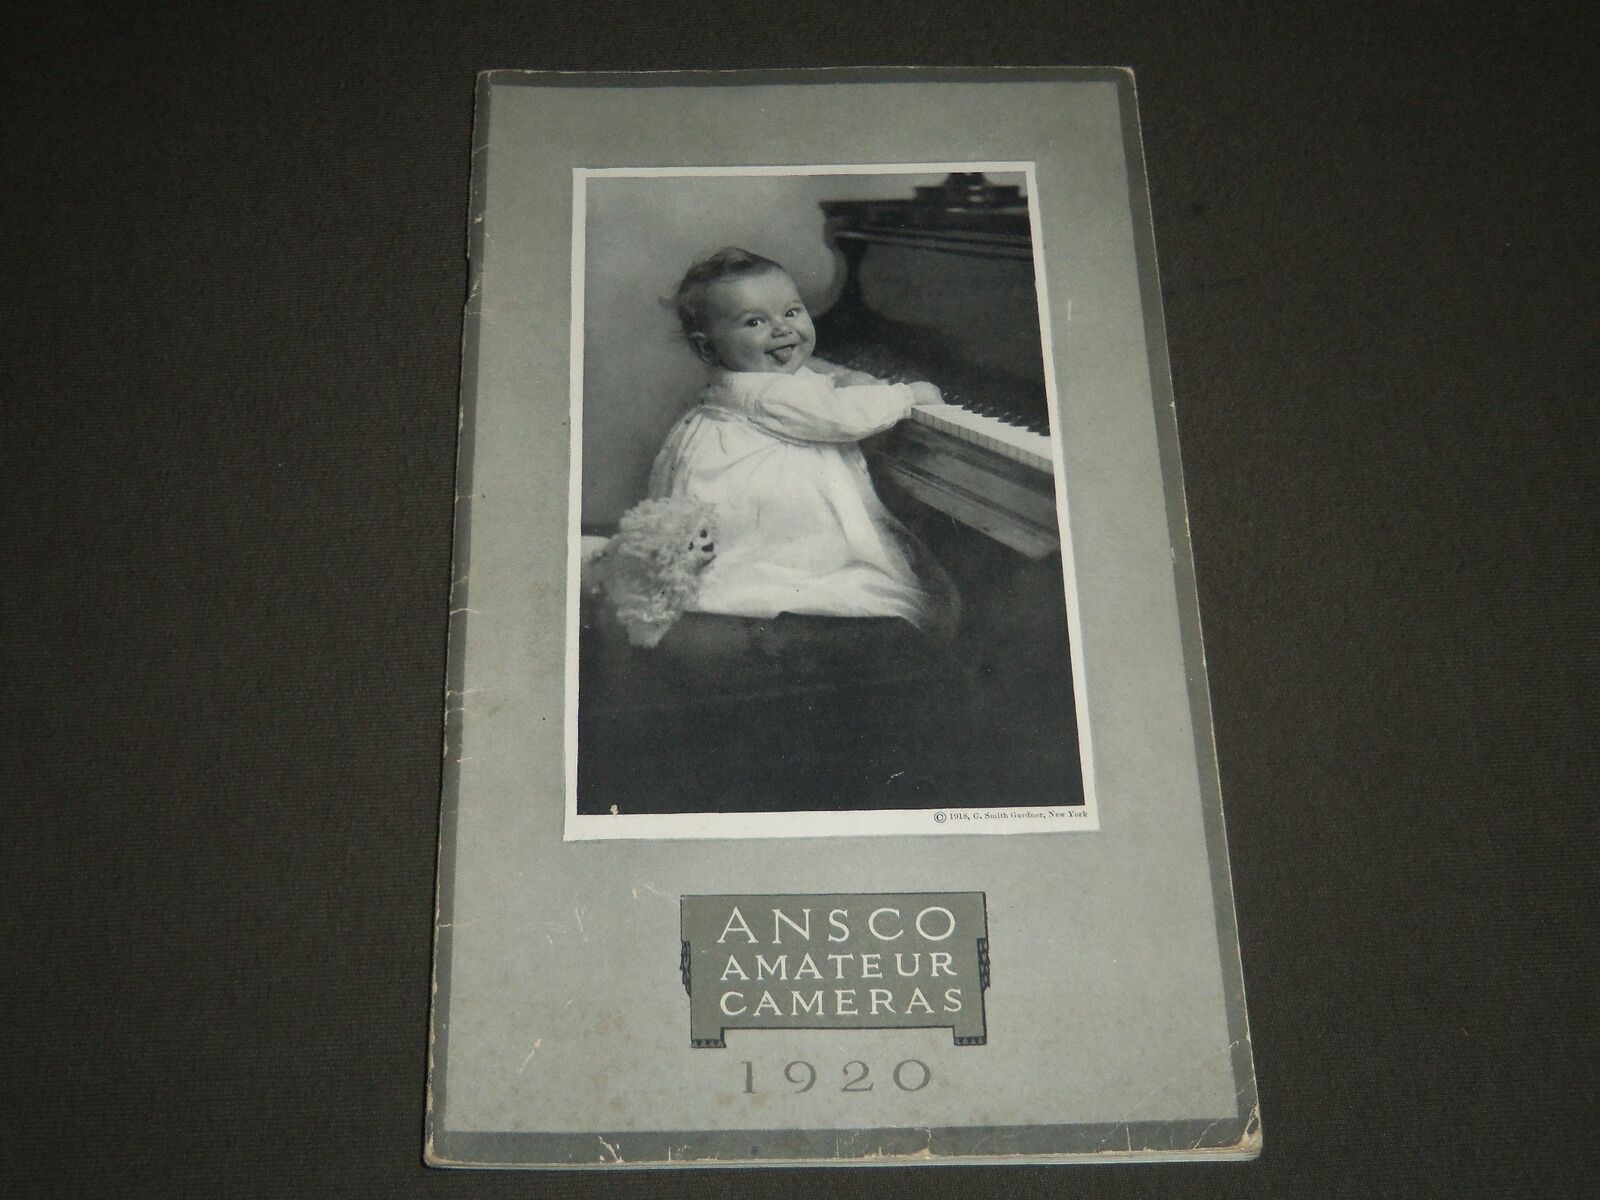 1920 ANSCO AMATEUR CAMERAS SOFTCOVER BOOK - BINGHAMTON NEW YORK - J 2314